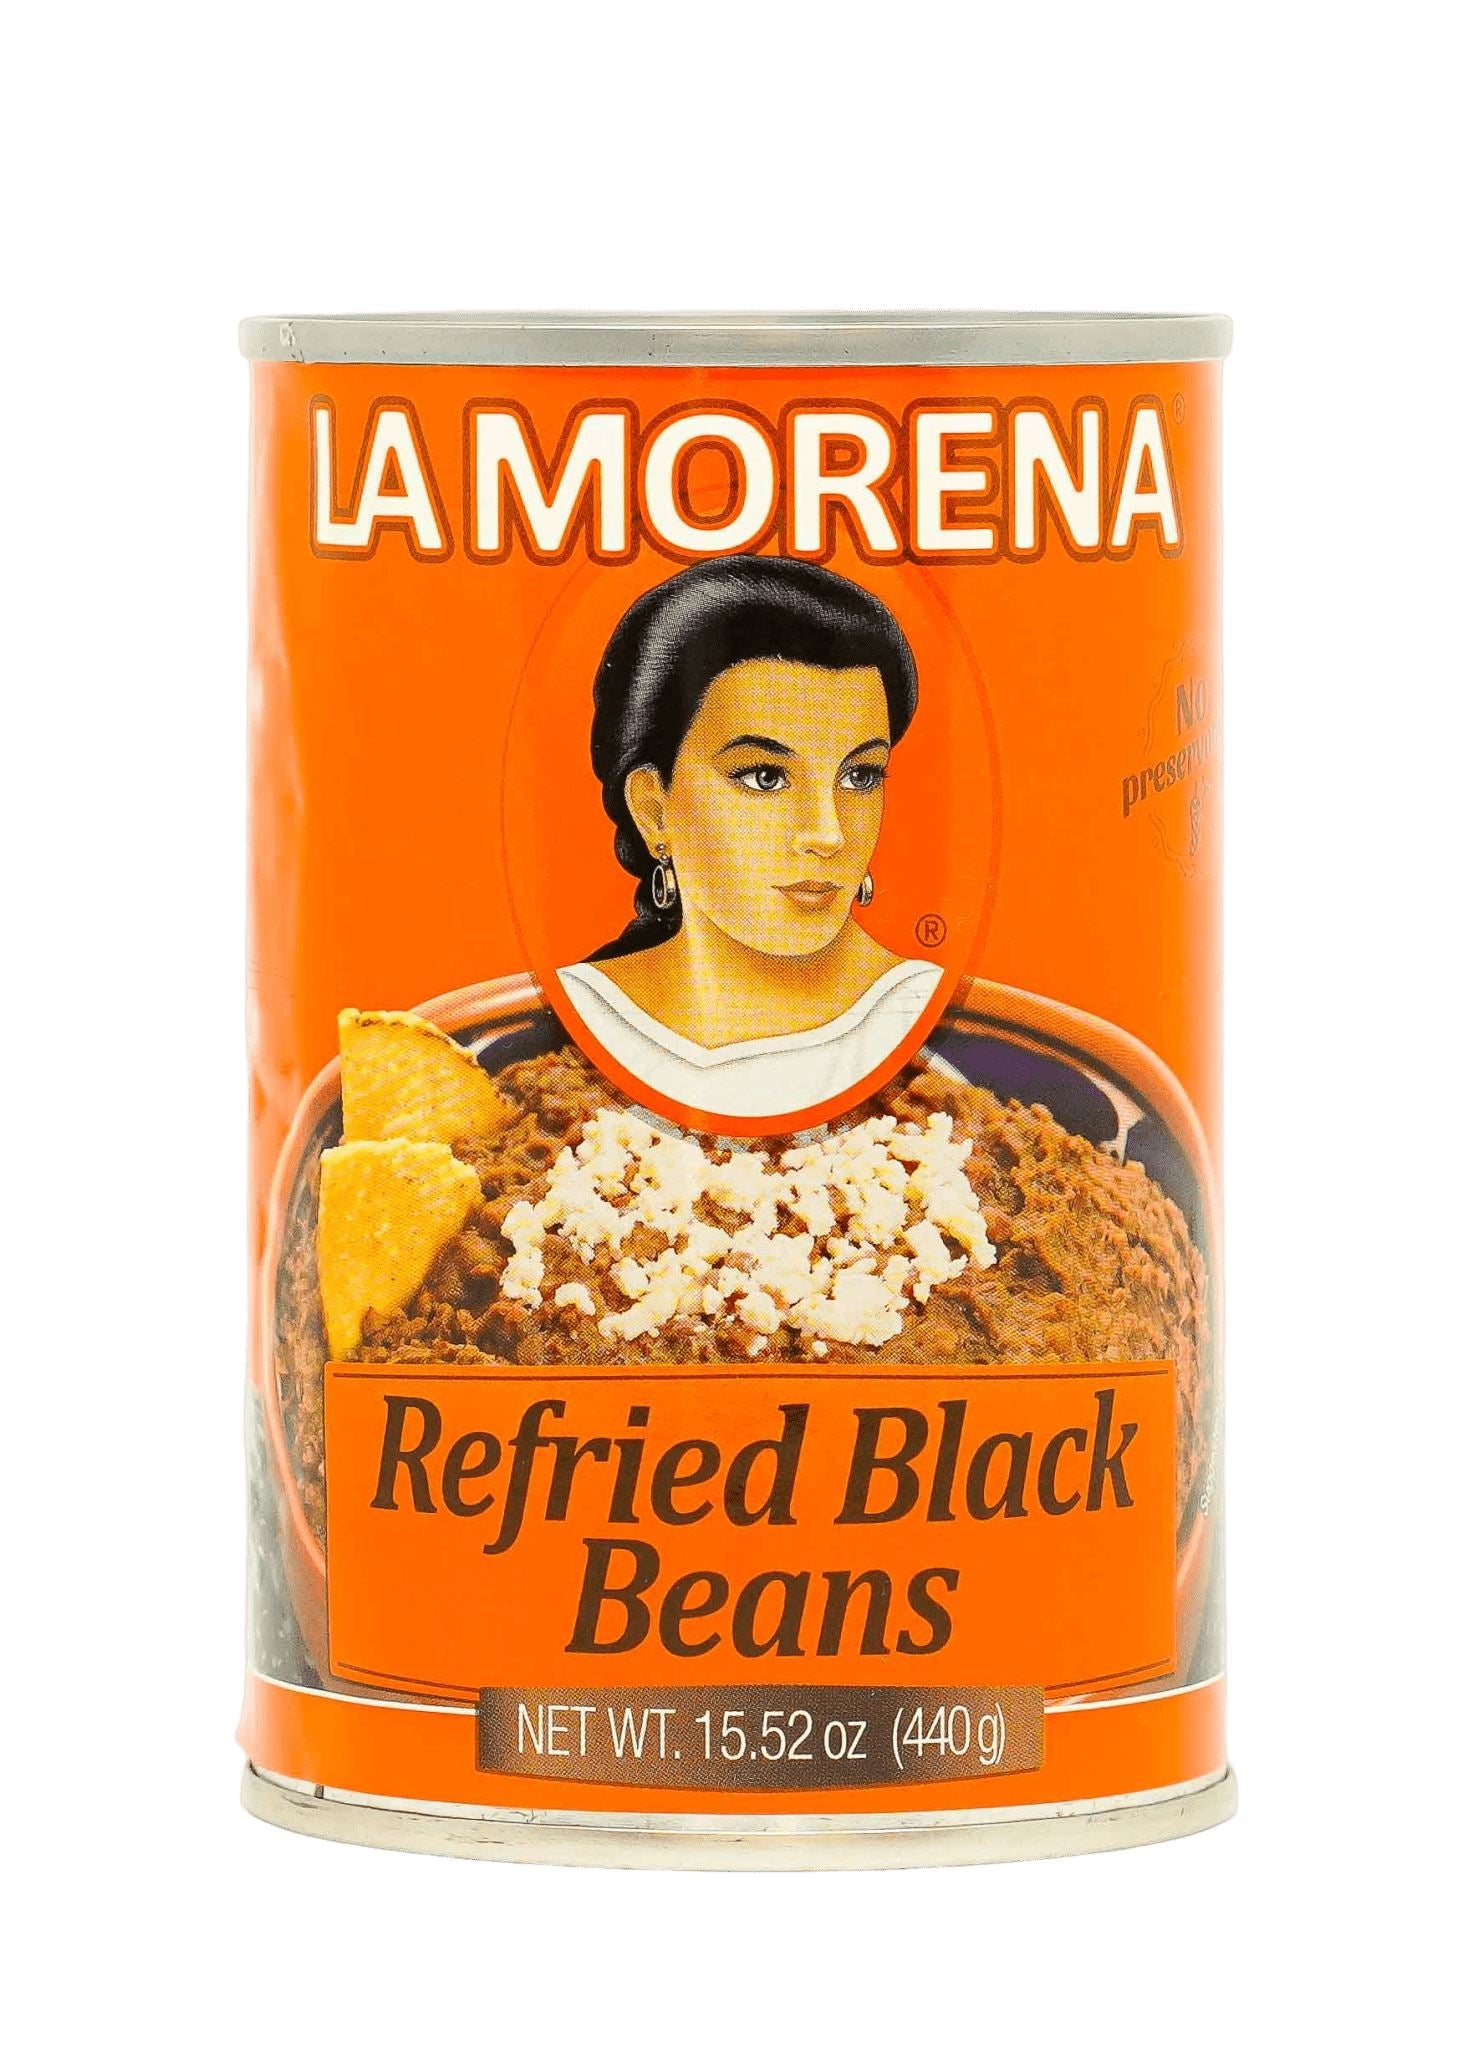 La Morena Refried Black Beans 440g Beans La Morena 